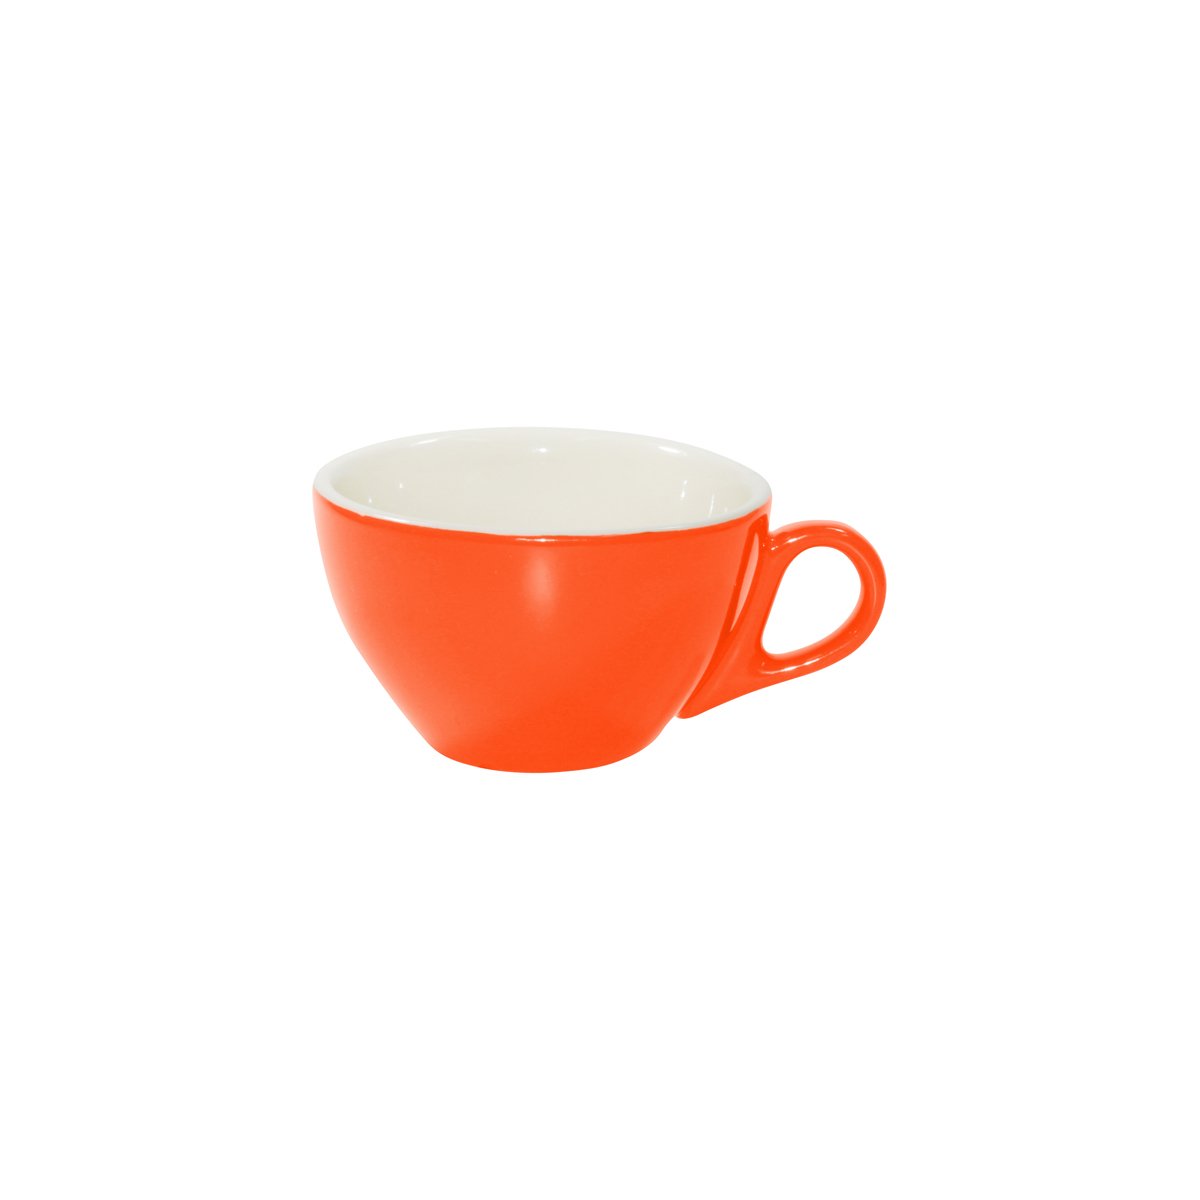 BW0130 Brew Saffron Cappuccino Cup 220ml Tomkin Australia Hospitality Supplies